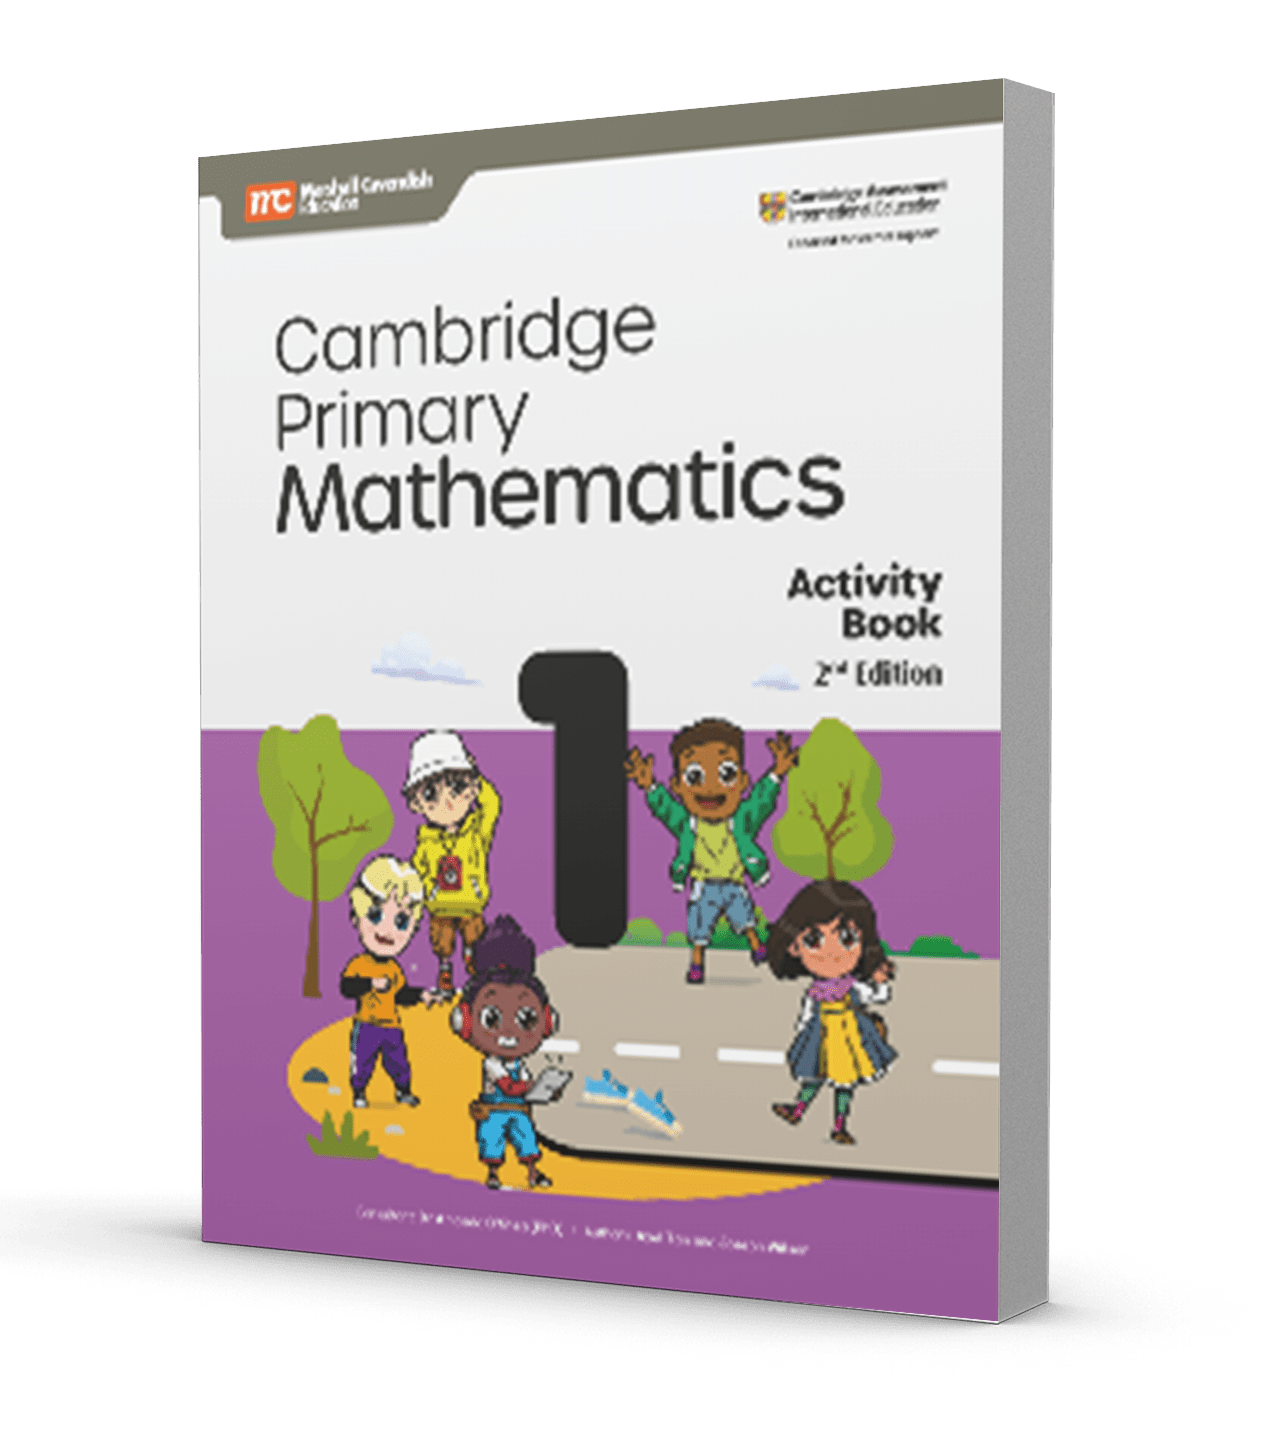 Cambridge Primary Mathematics (2nd edition) Activity Book